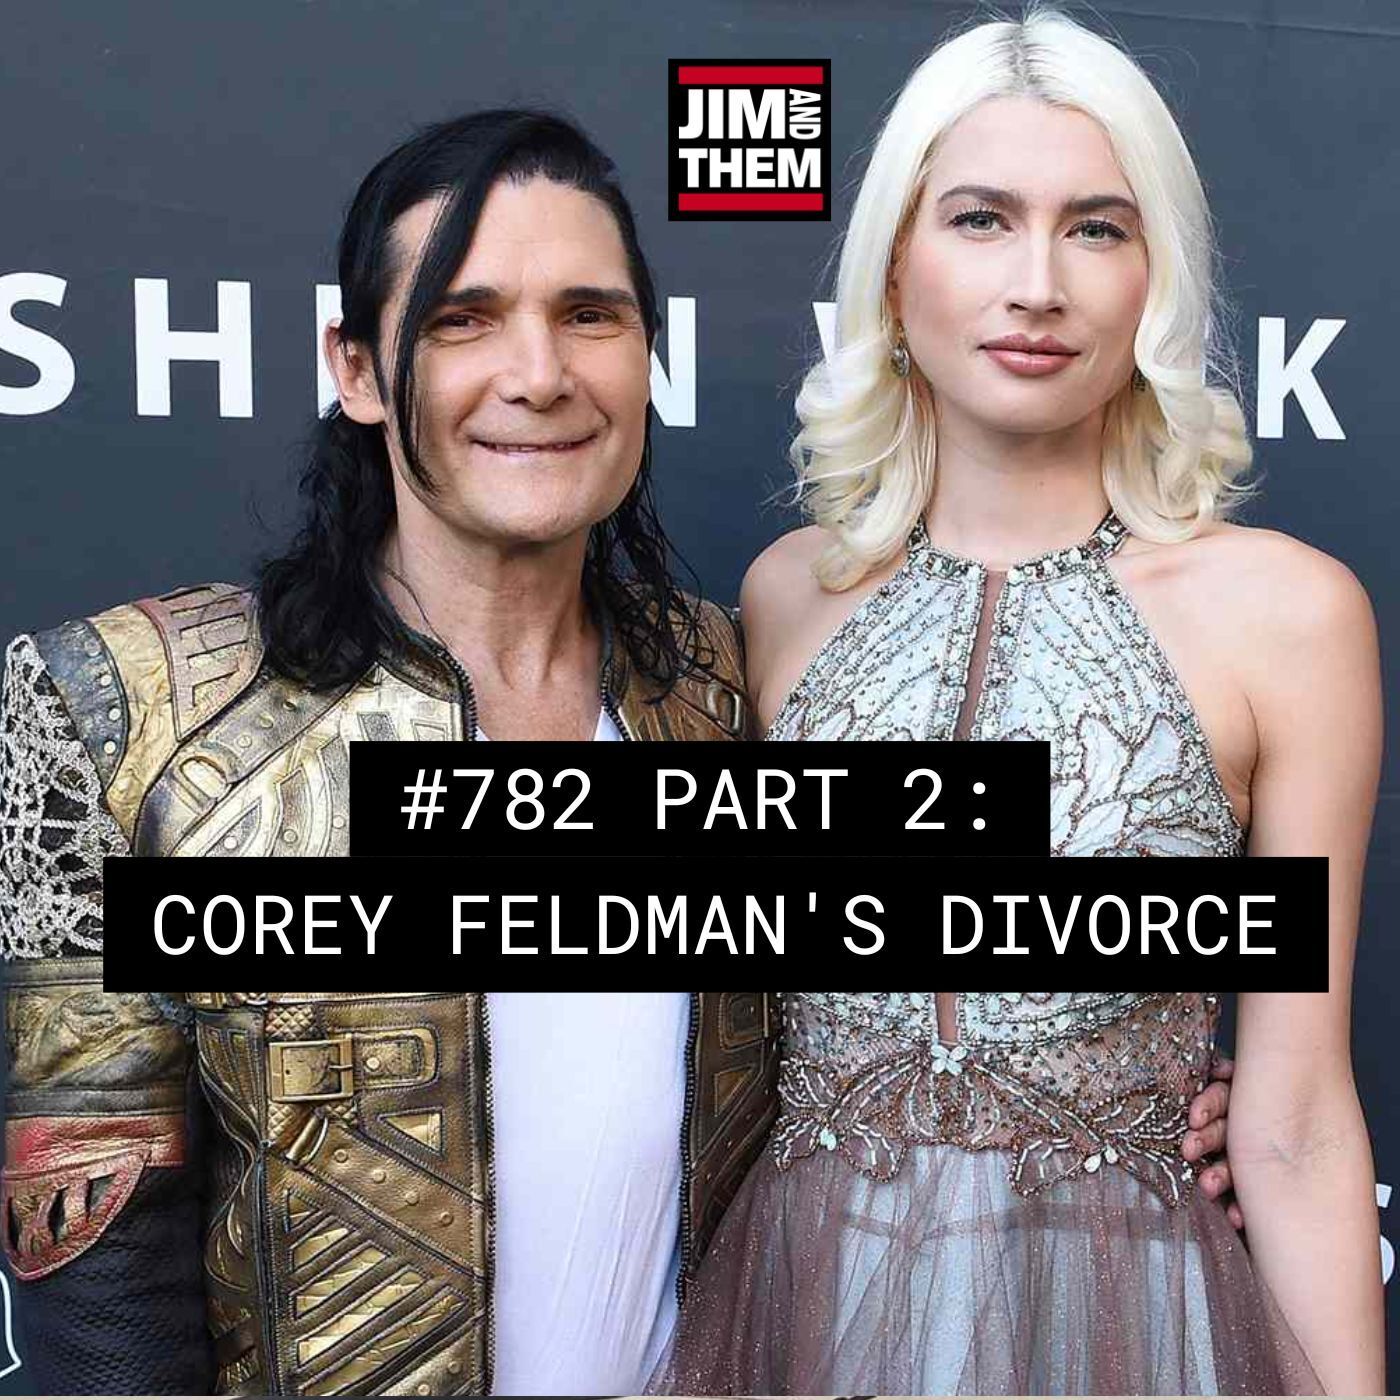 Jim and Them / Corey Feldmans Divorce